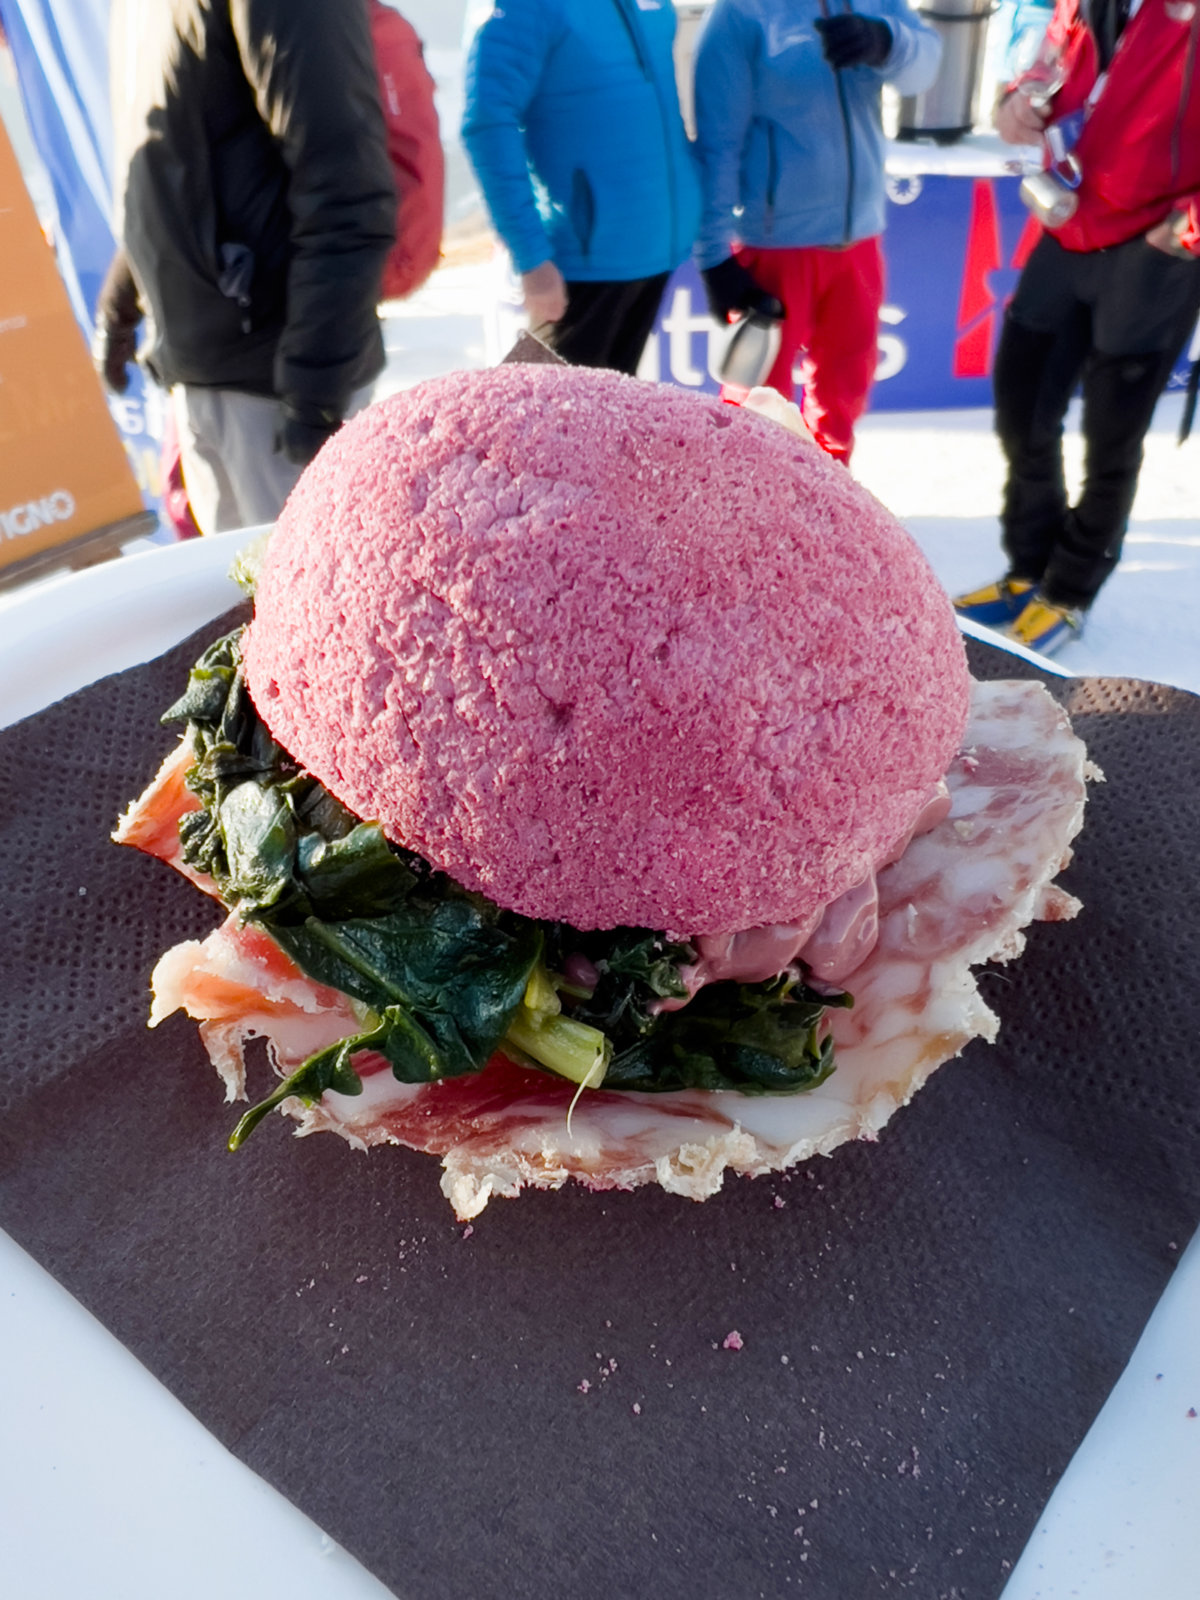 A pink breakfast burger at Sunrise Mattias in Livigno. Italy